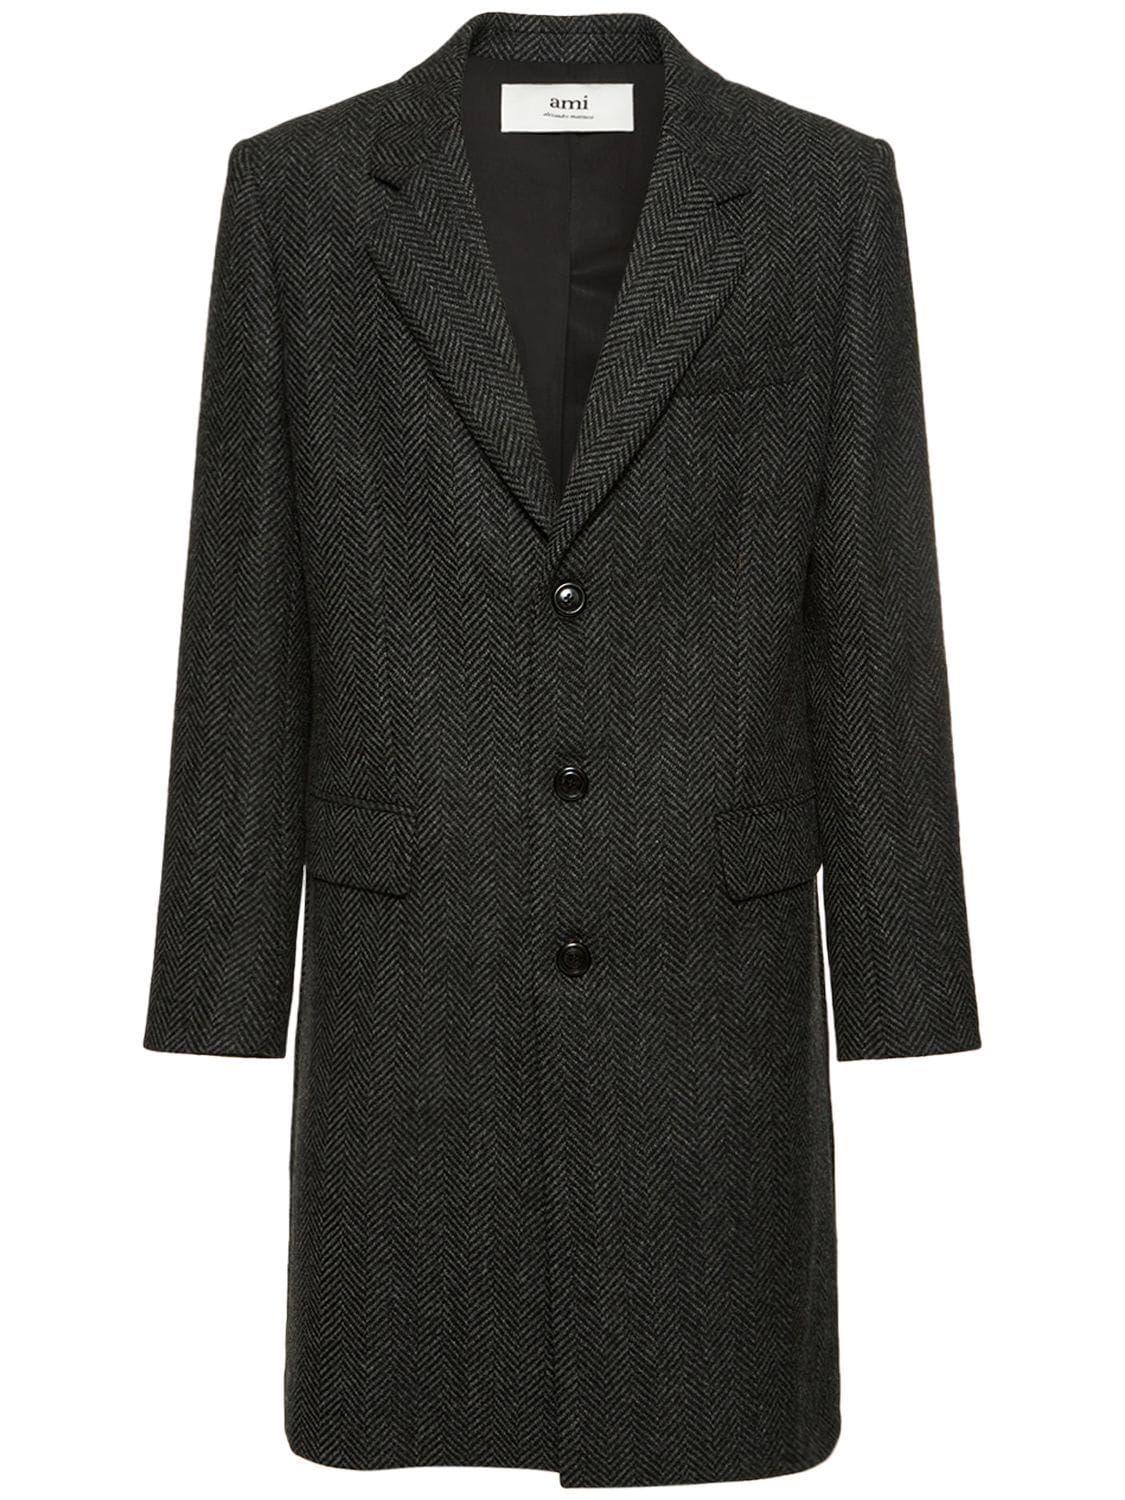 AMI Wool Herringbone Coat in Black for Men | Lyst